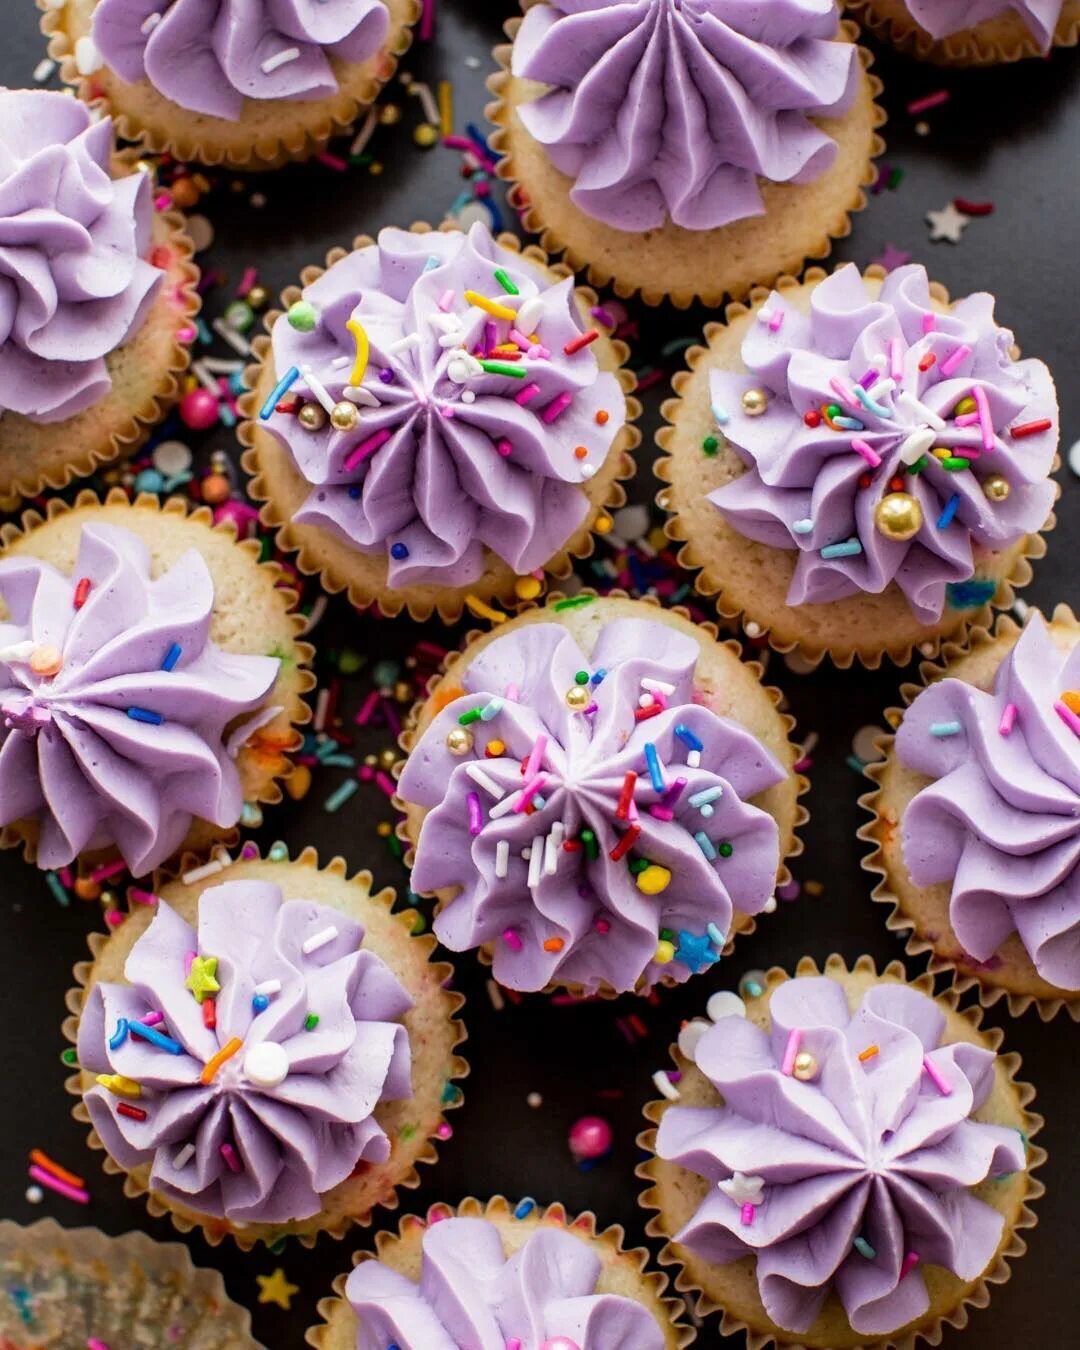 Sally's Baking Addiction в Instagram: "A little purple buttercrea...